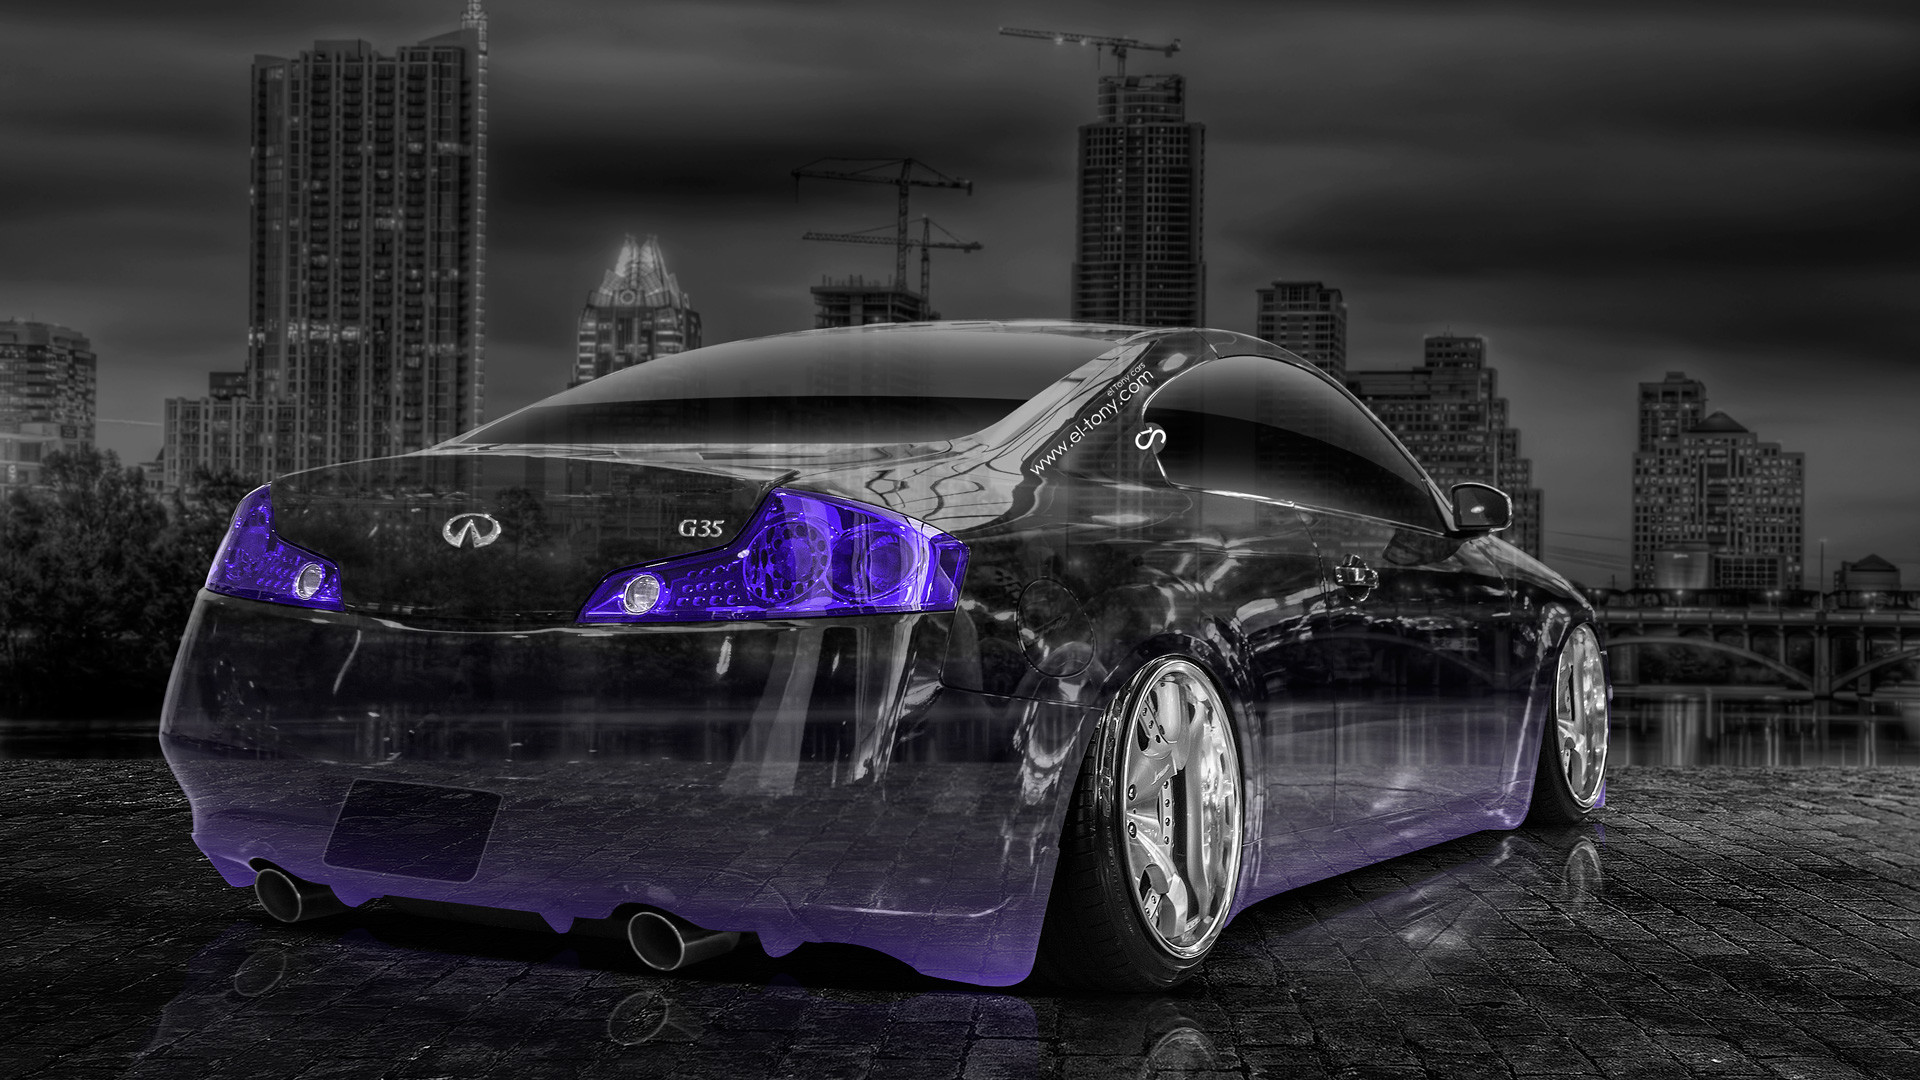 1920x1080 Infiniti-G35-Crystal-City-Car-2014-Violet-Neon-